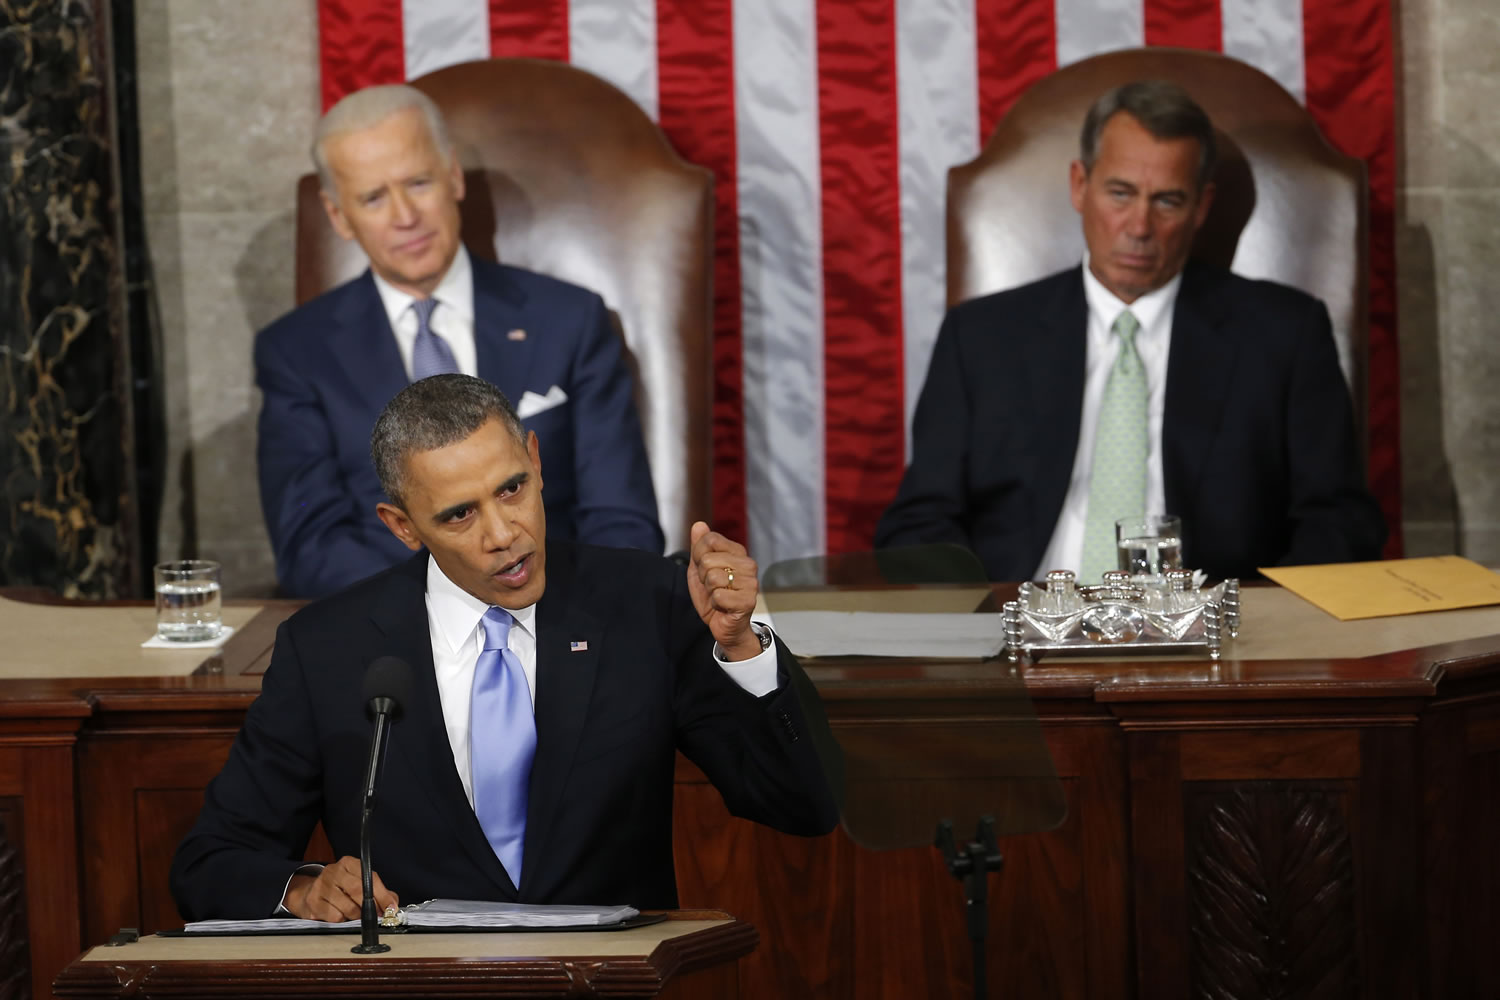 Vice President Joe Biden and House Speaker John Boehner of Ohio listens as President Barack Obama gives his State of the Union address on Capitol Hill in Washington.